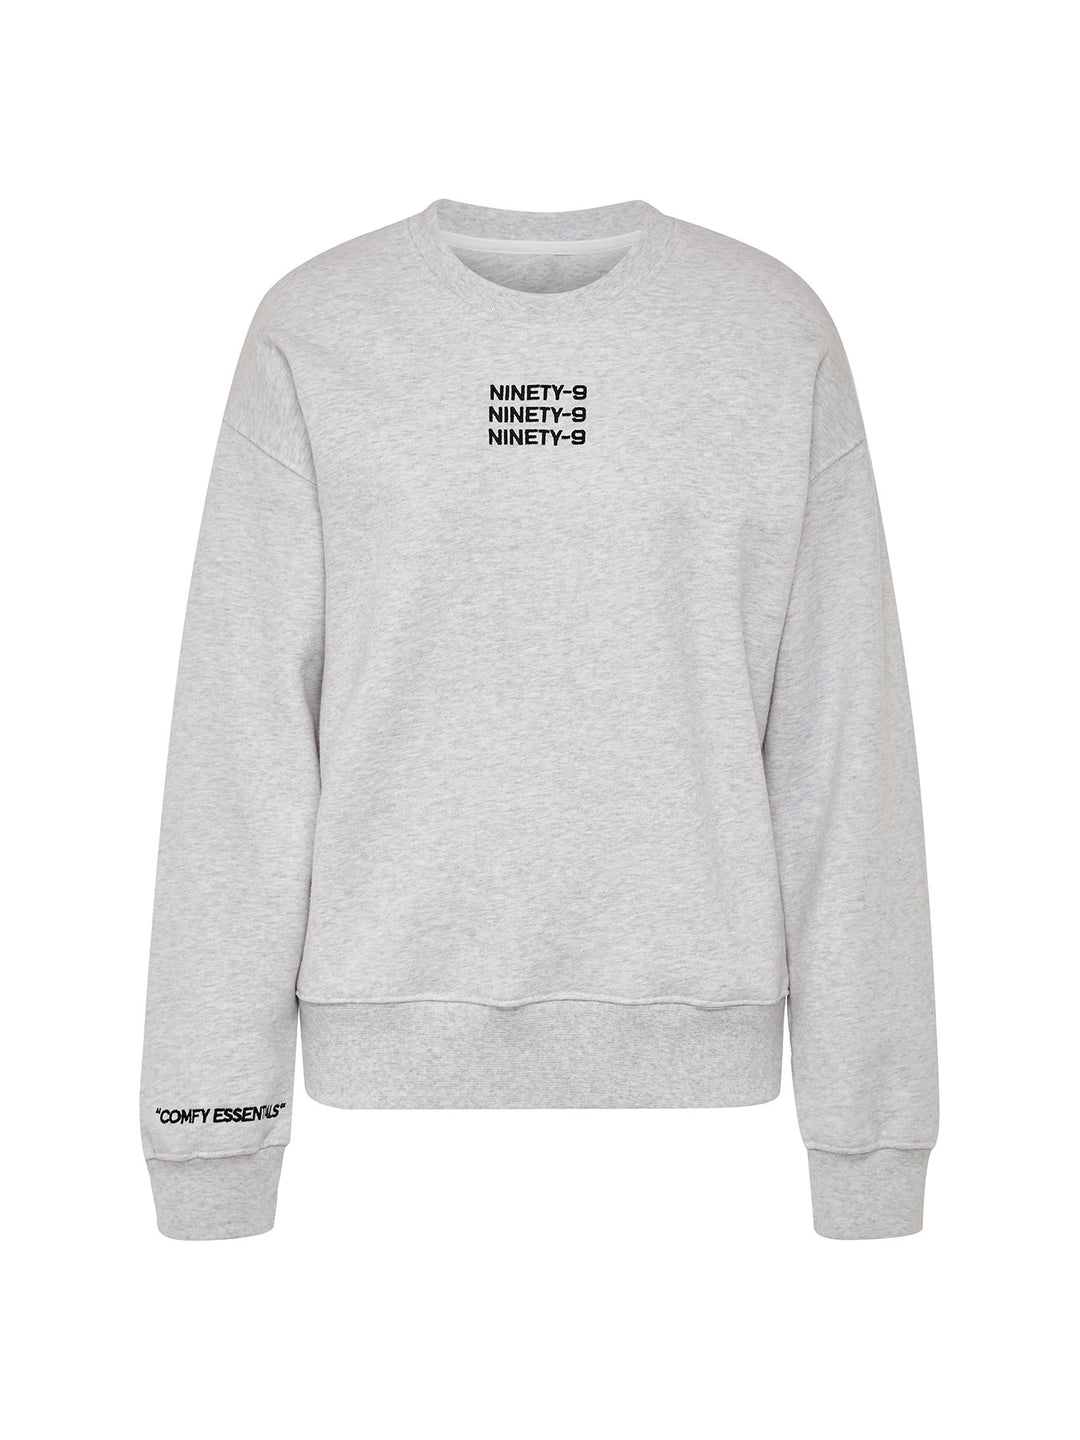 EMA - Sweatshirt, Light Grey